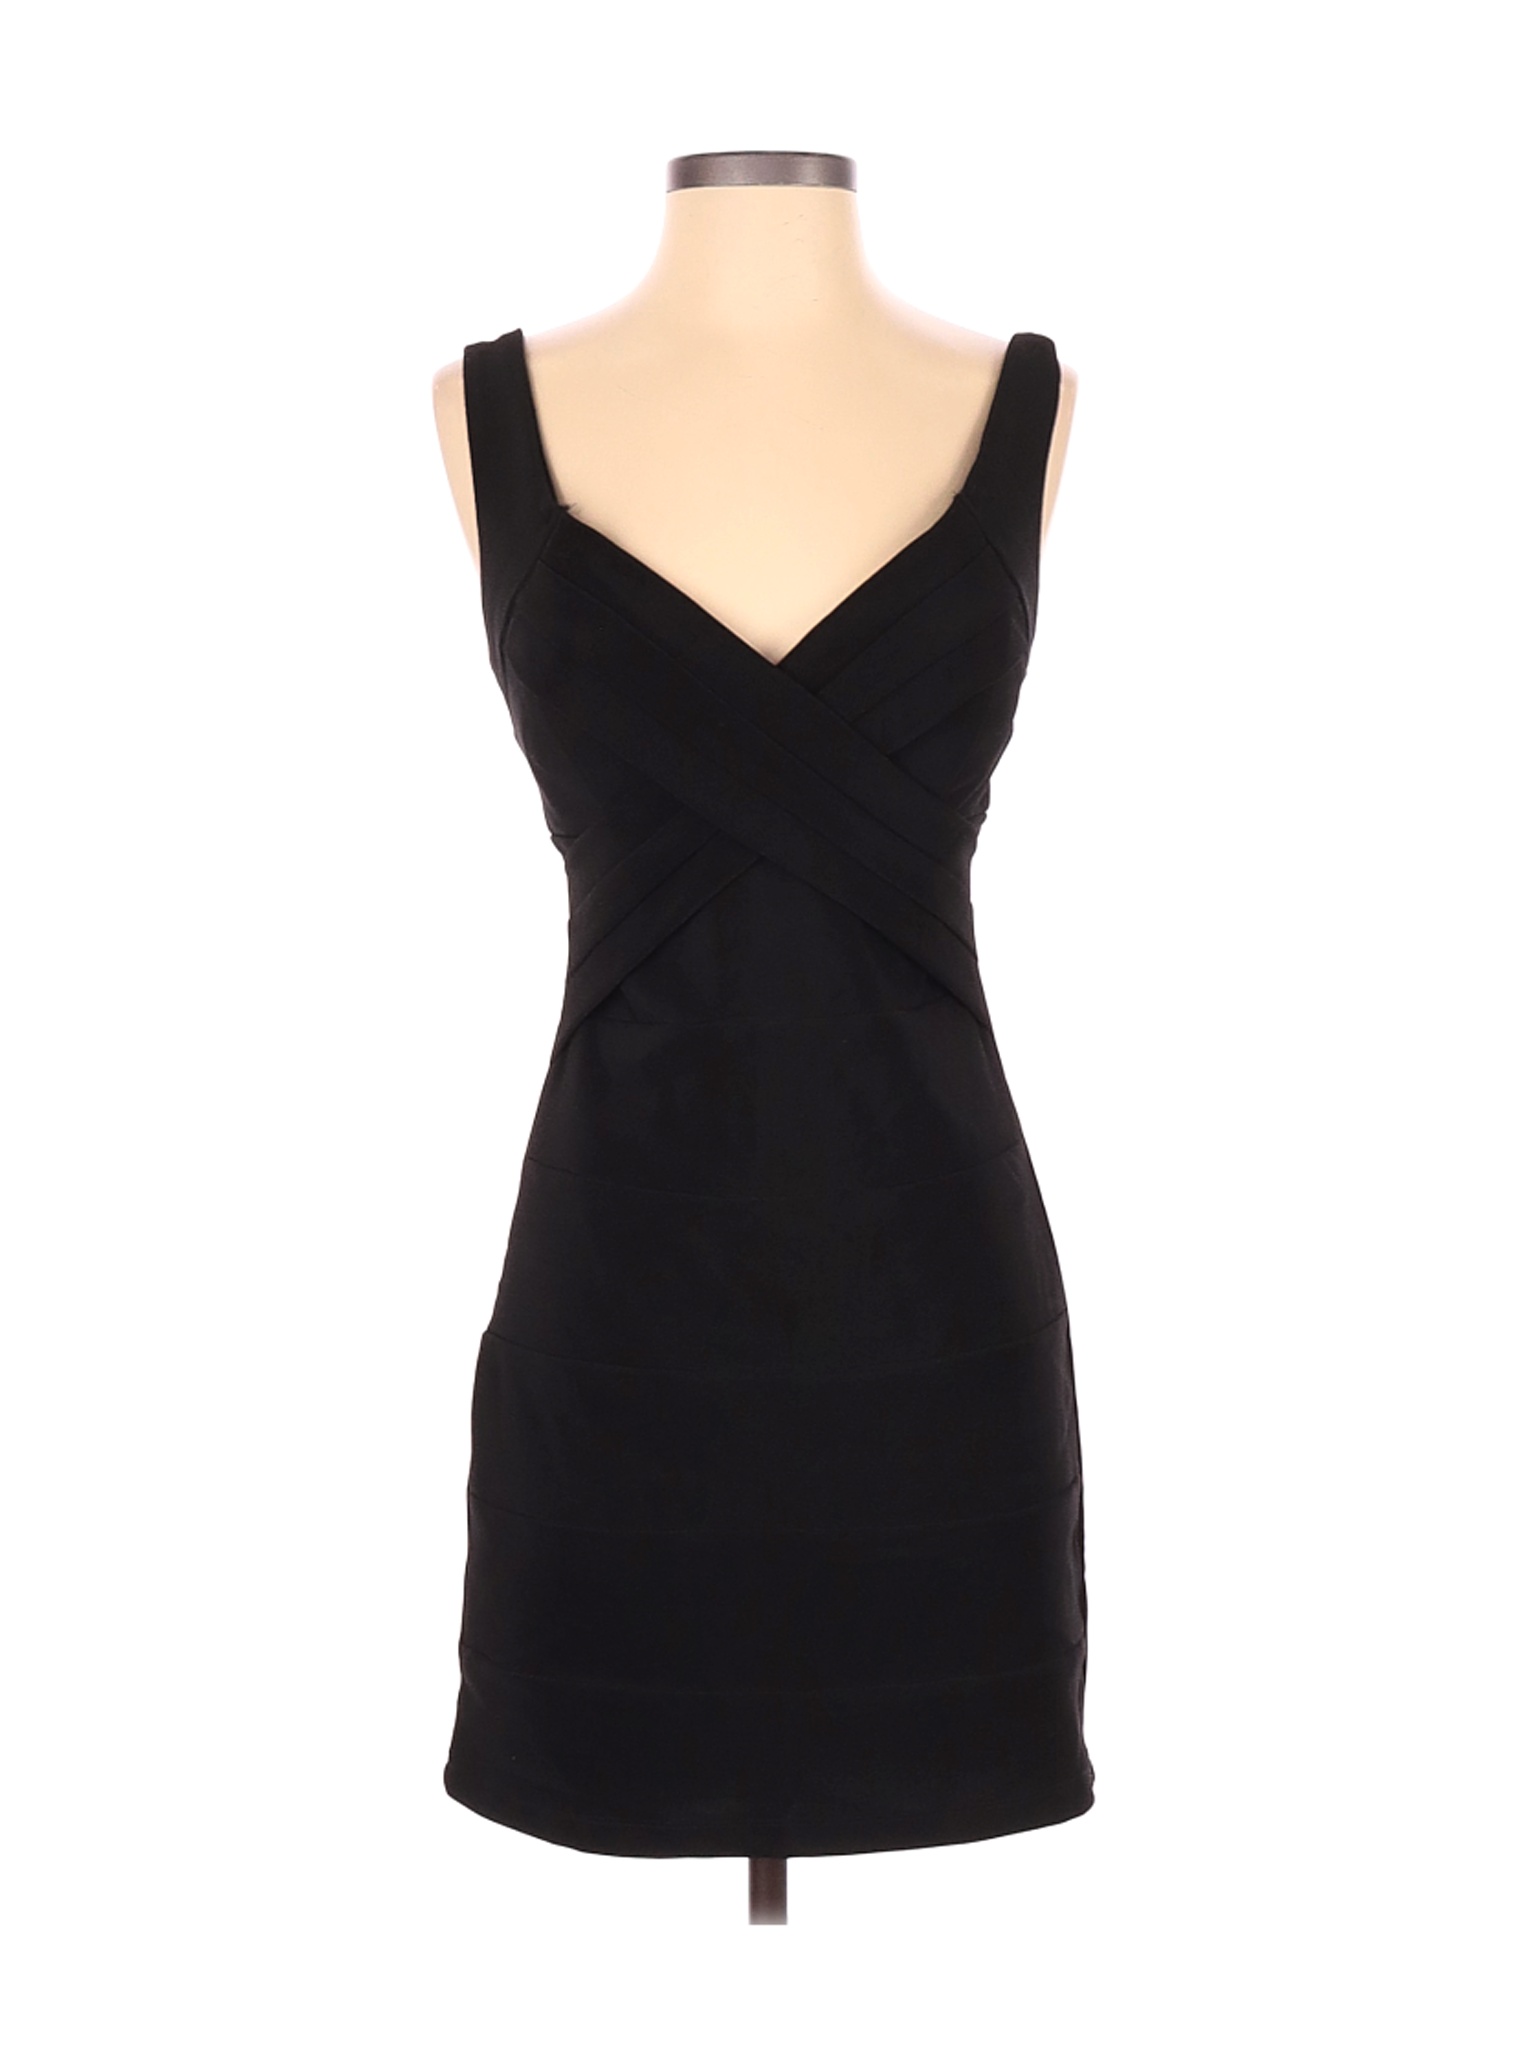 Emerald Sundae Women Black Cocktail Dress M | eBay